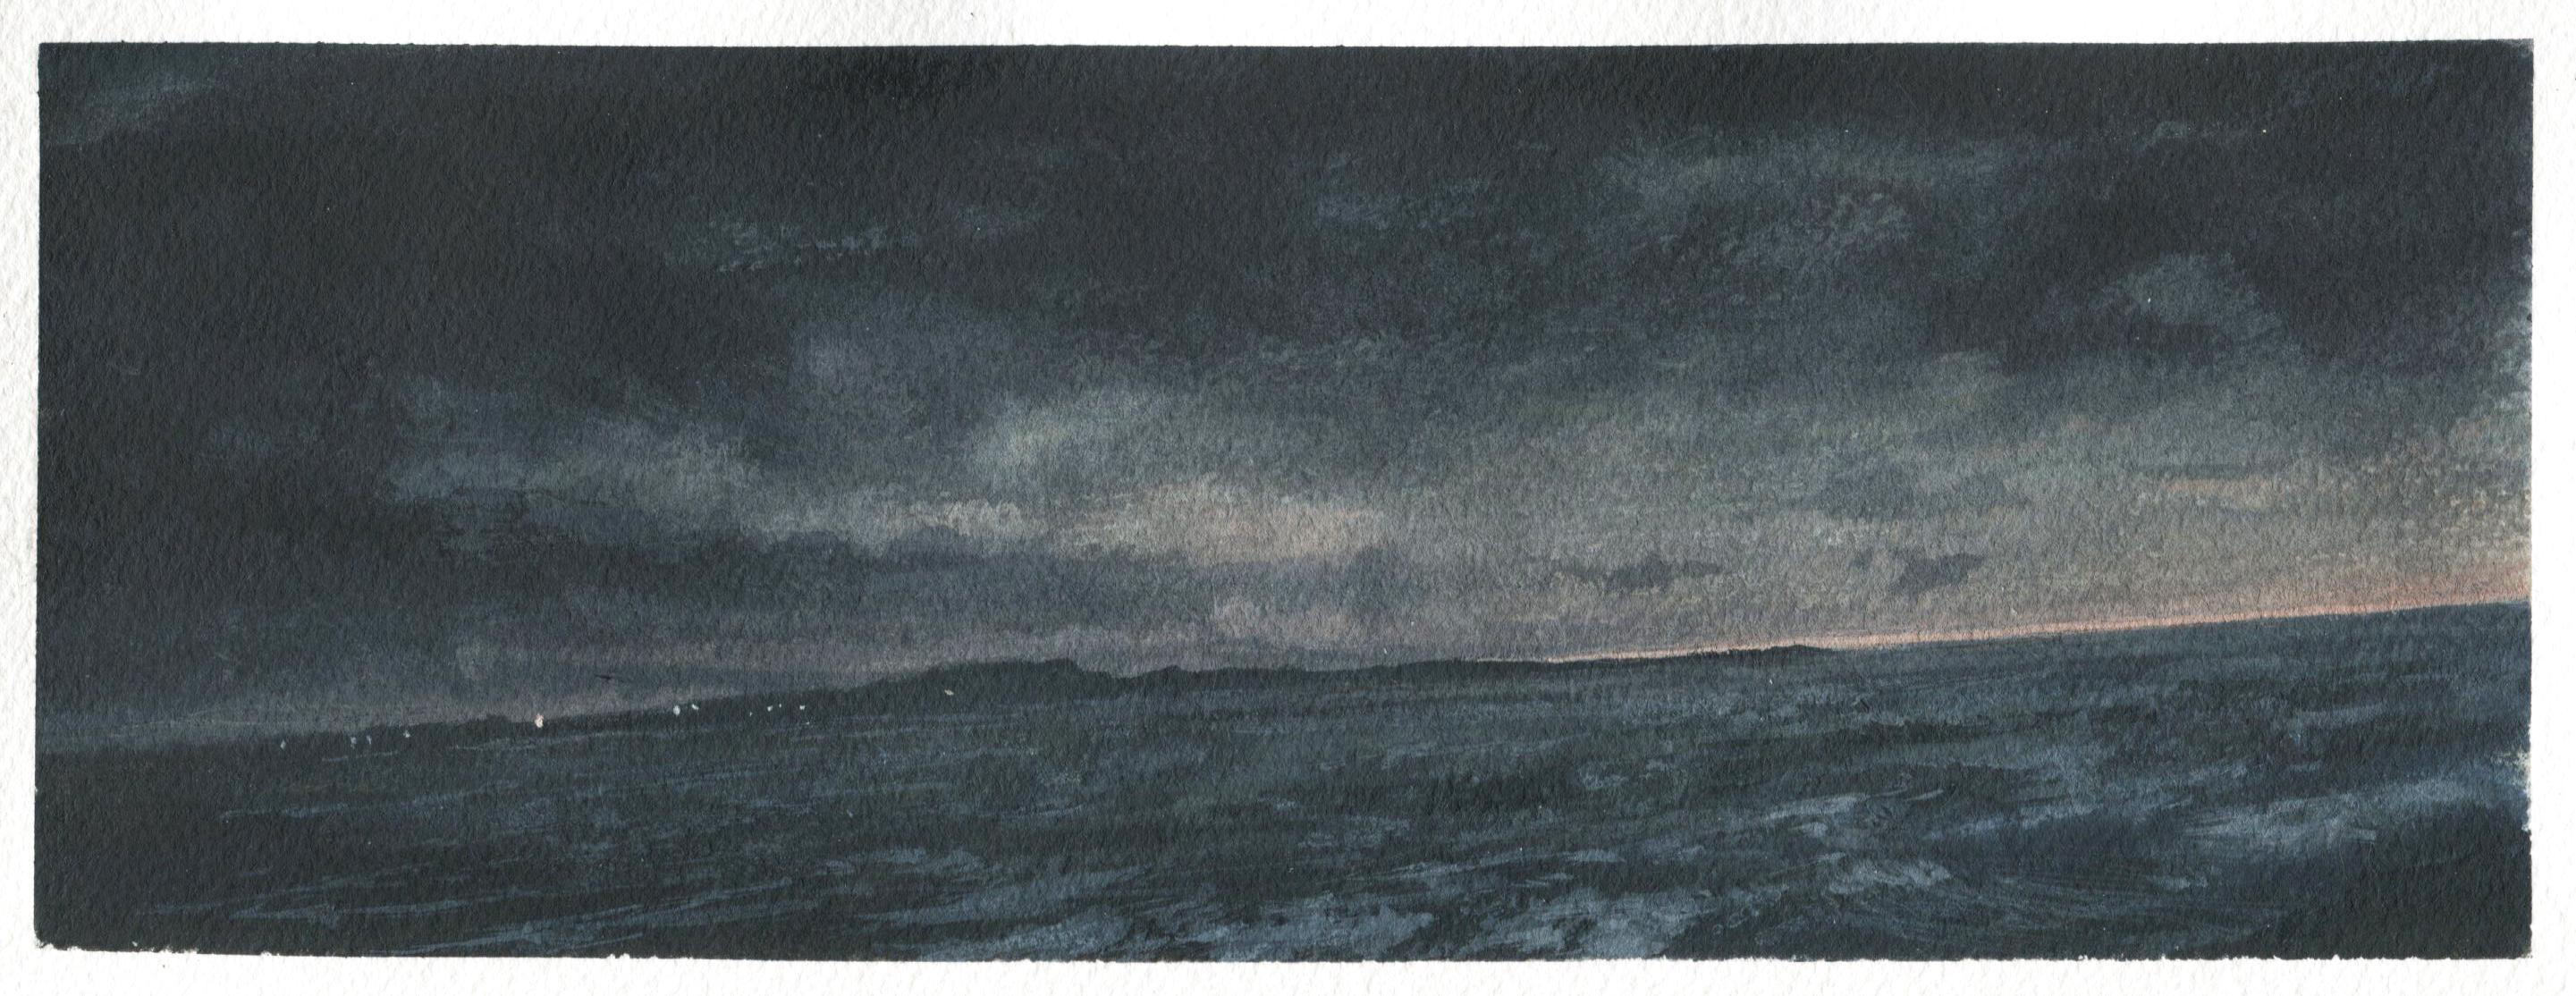 Dozier Bell Landscape Art - Mainland, dusk, northeastern seascape watercolor